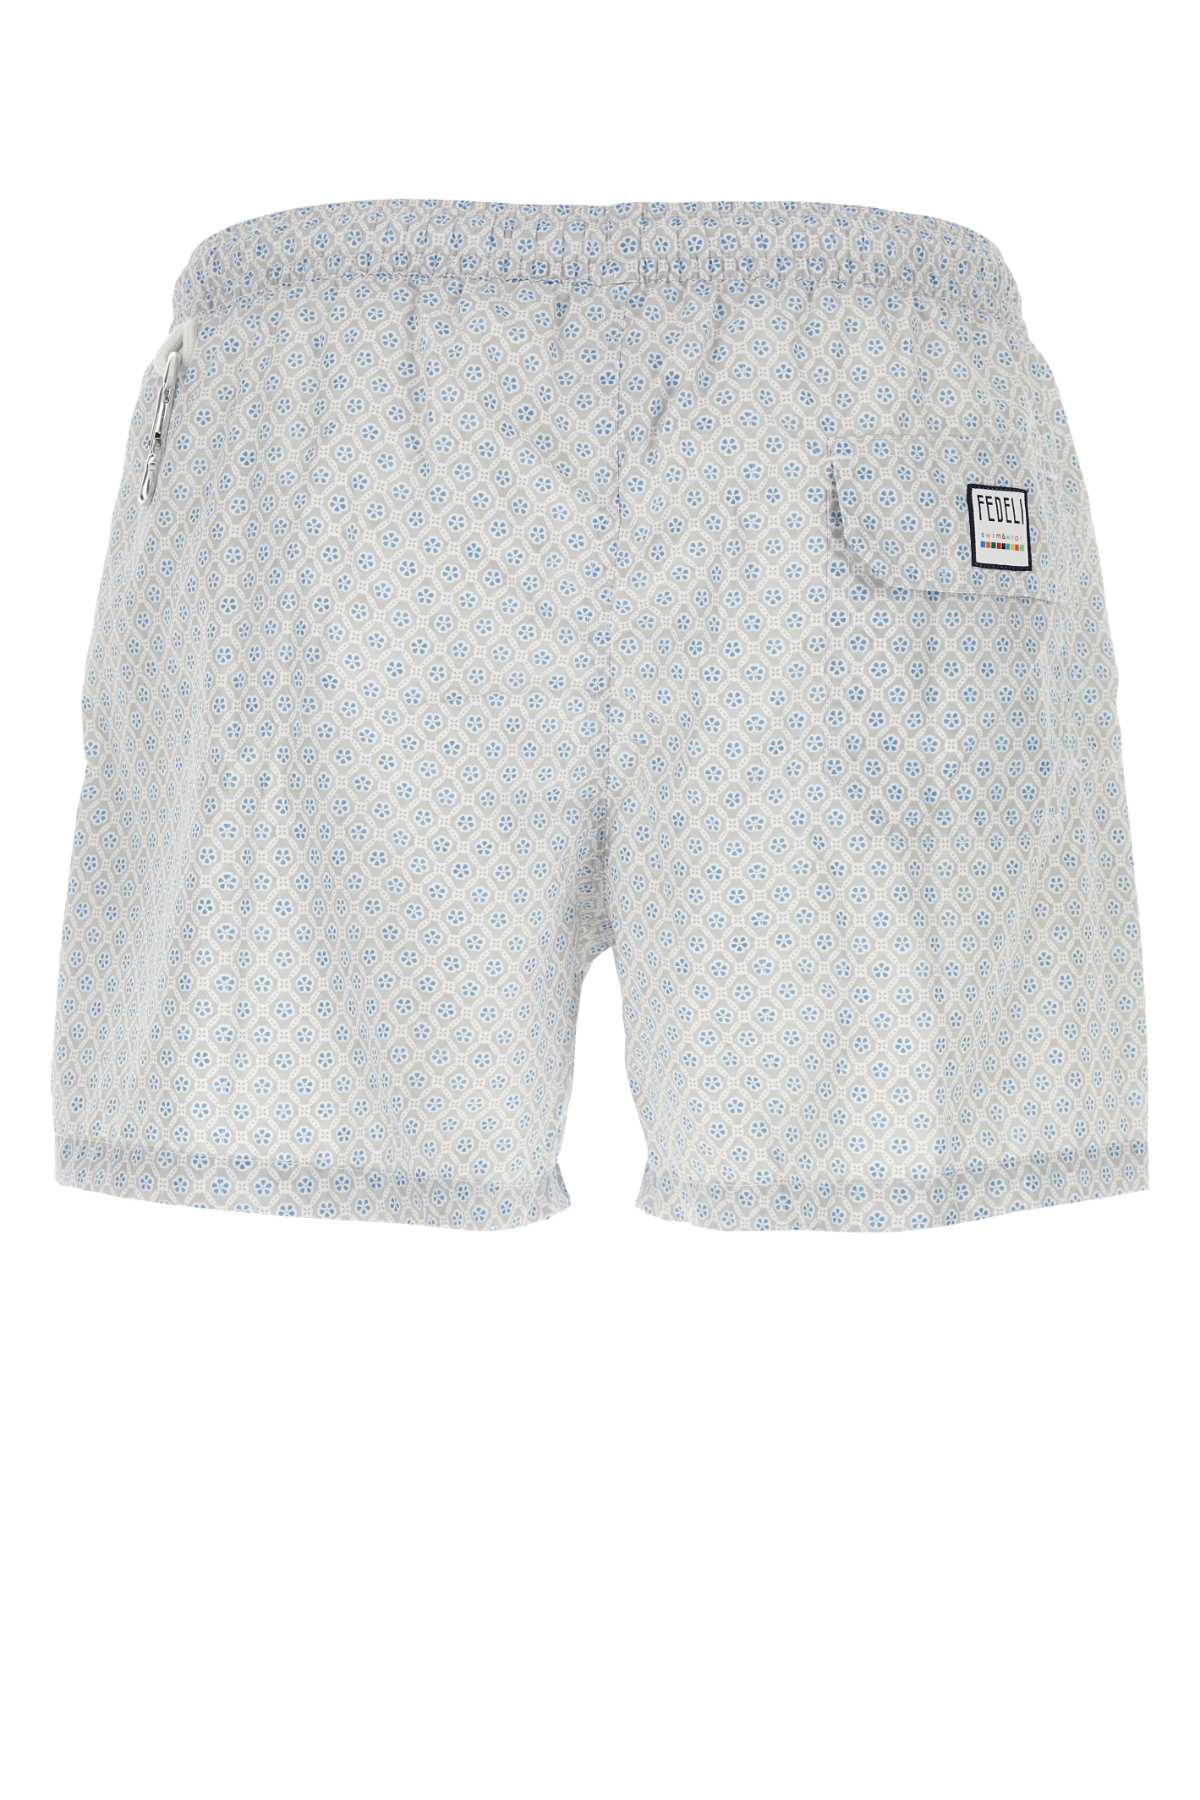 Fedeli Printed Polyester Swimming Shorts In Fantasiaazzurro